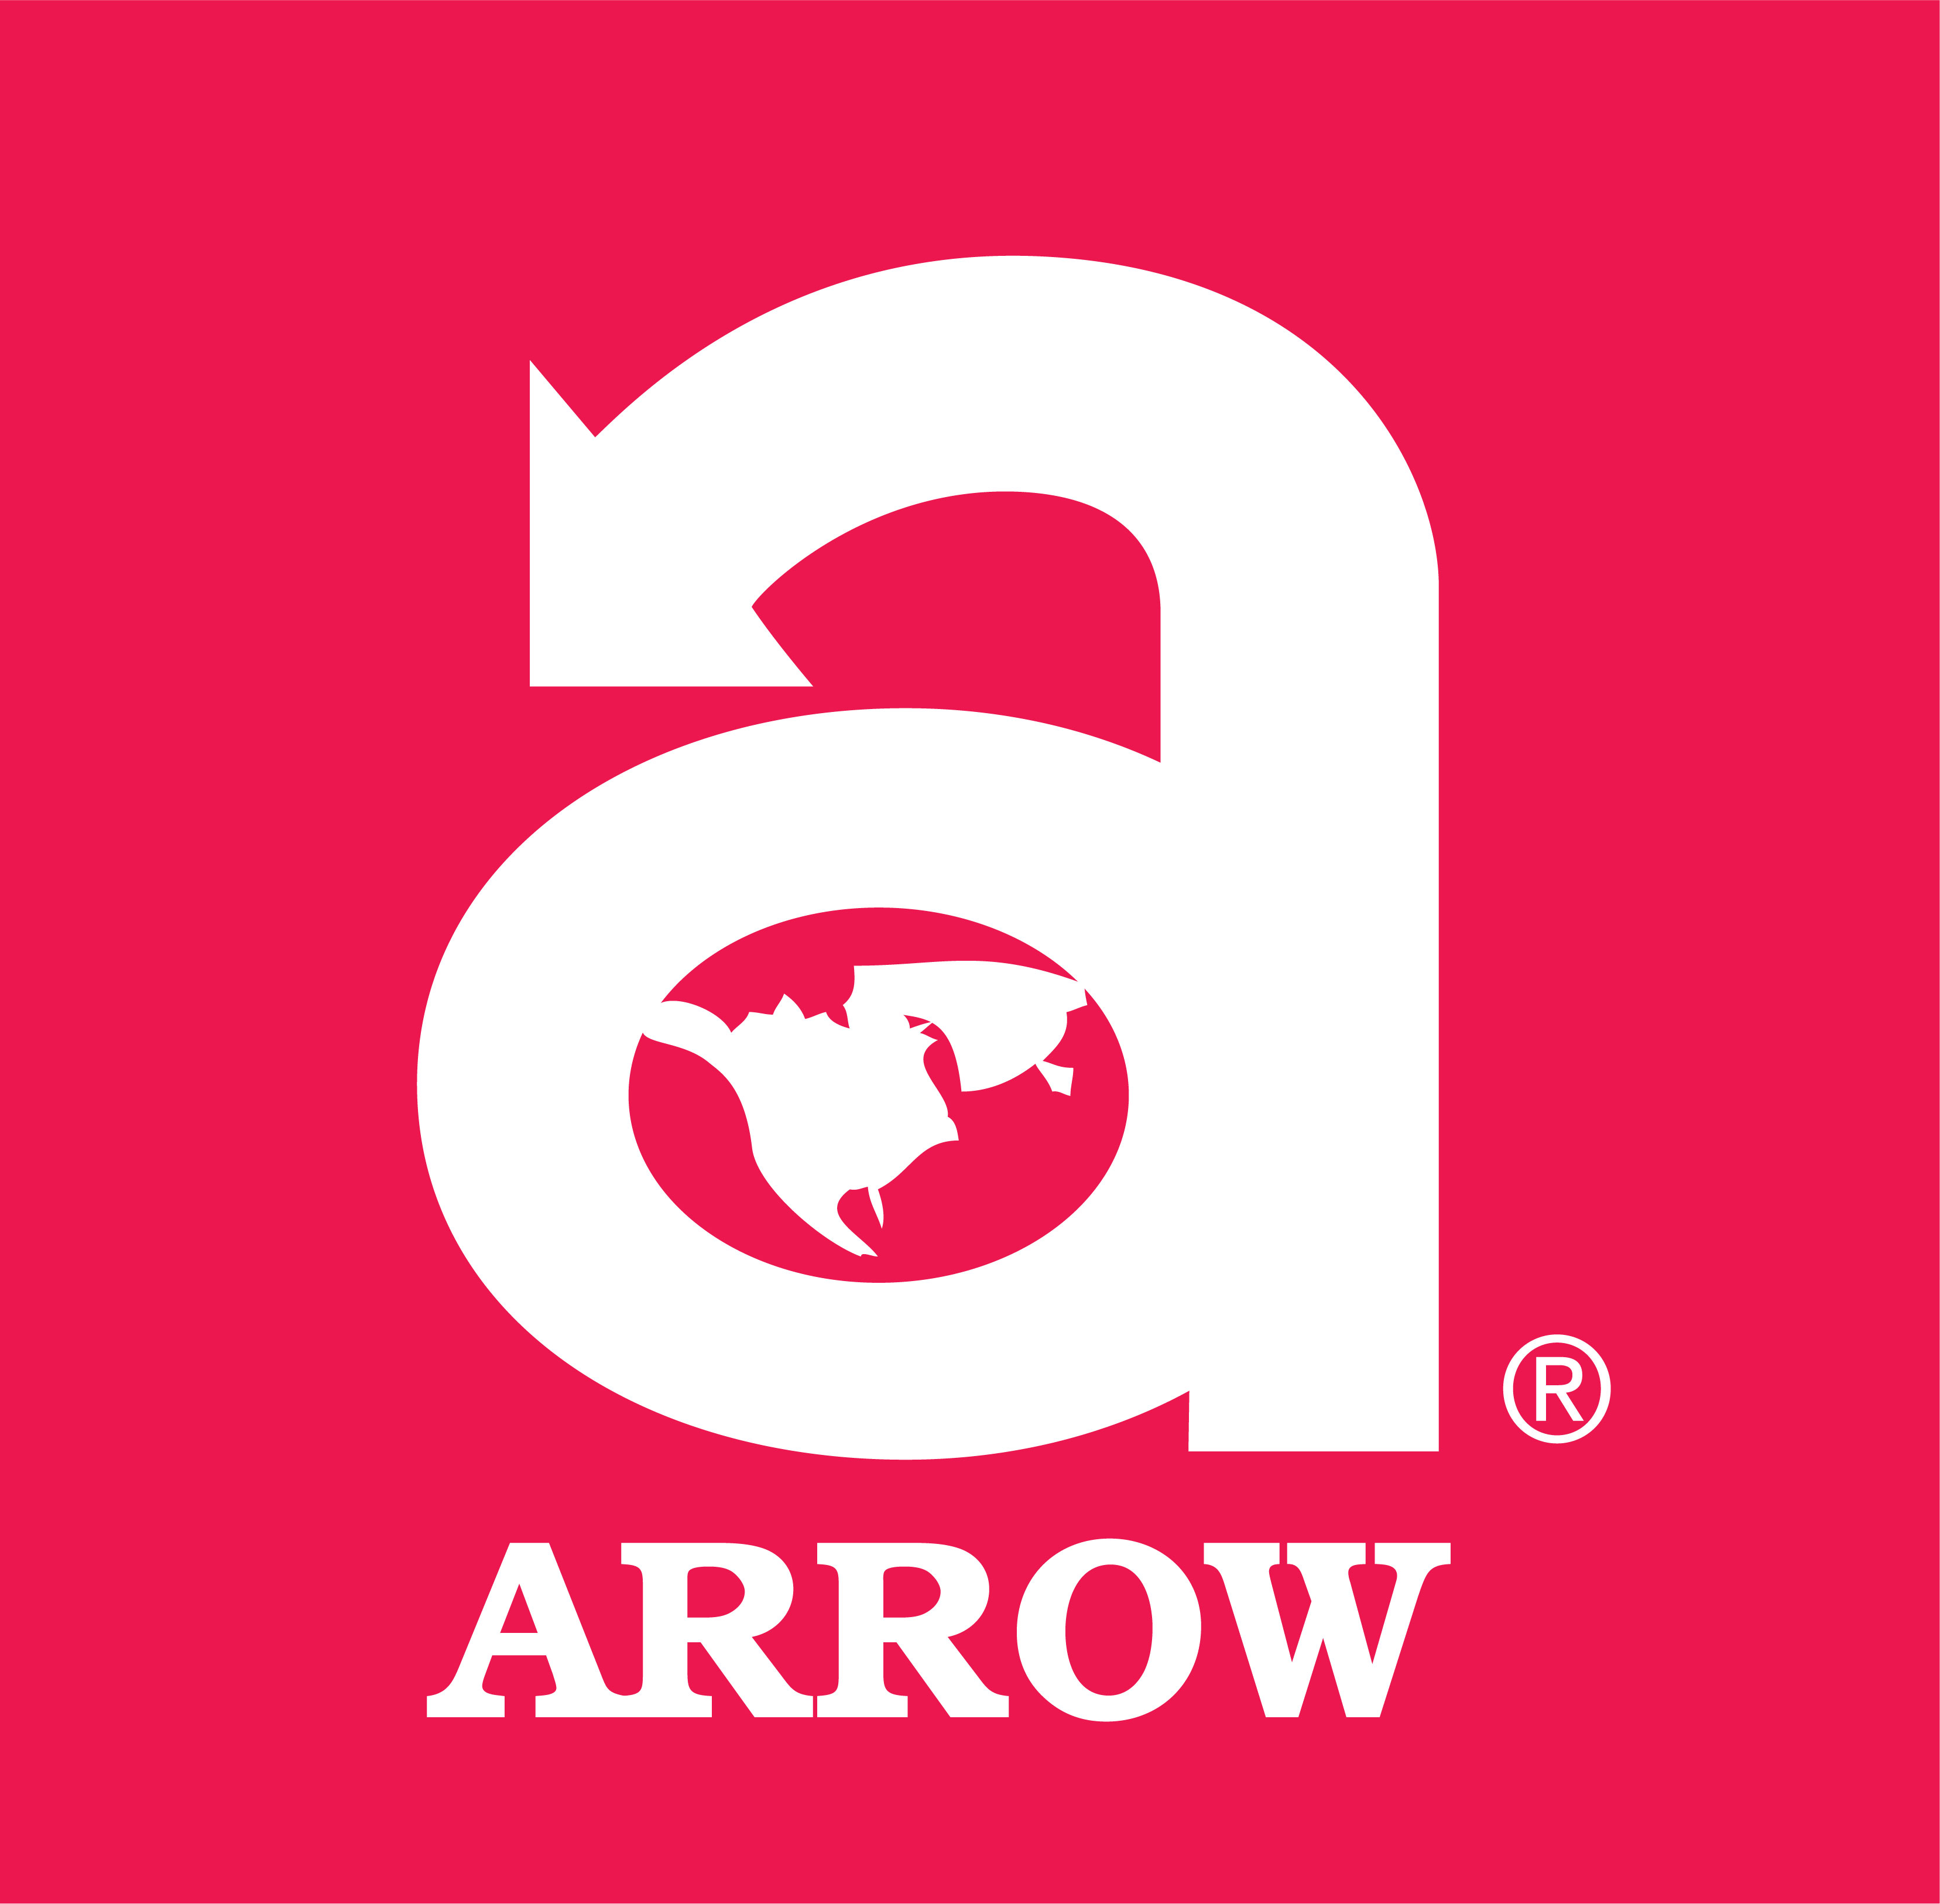 Arrow International